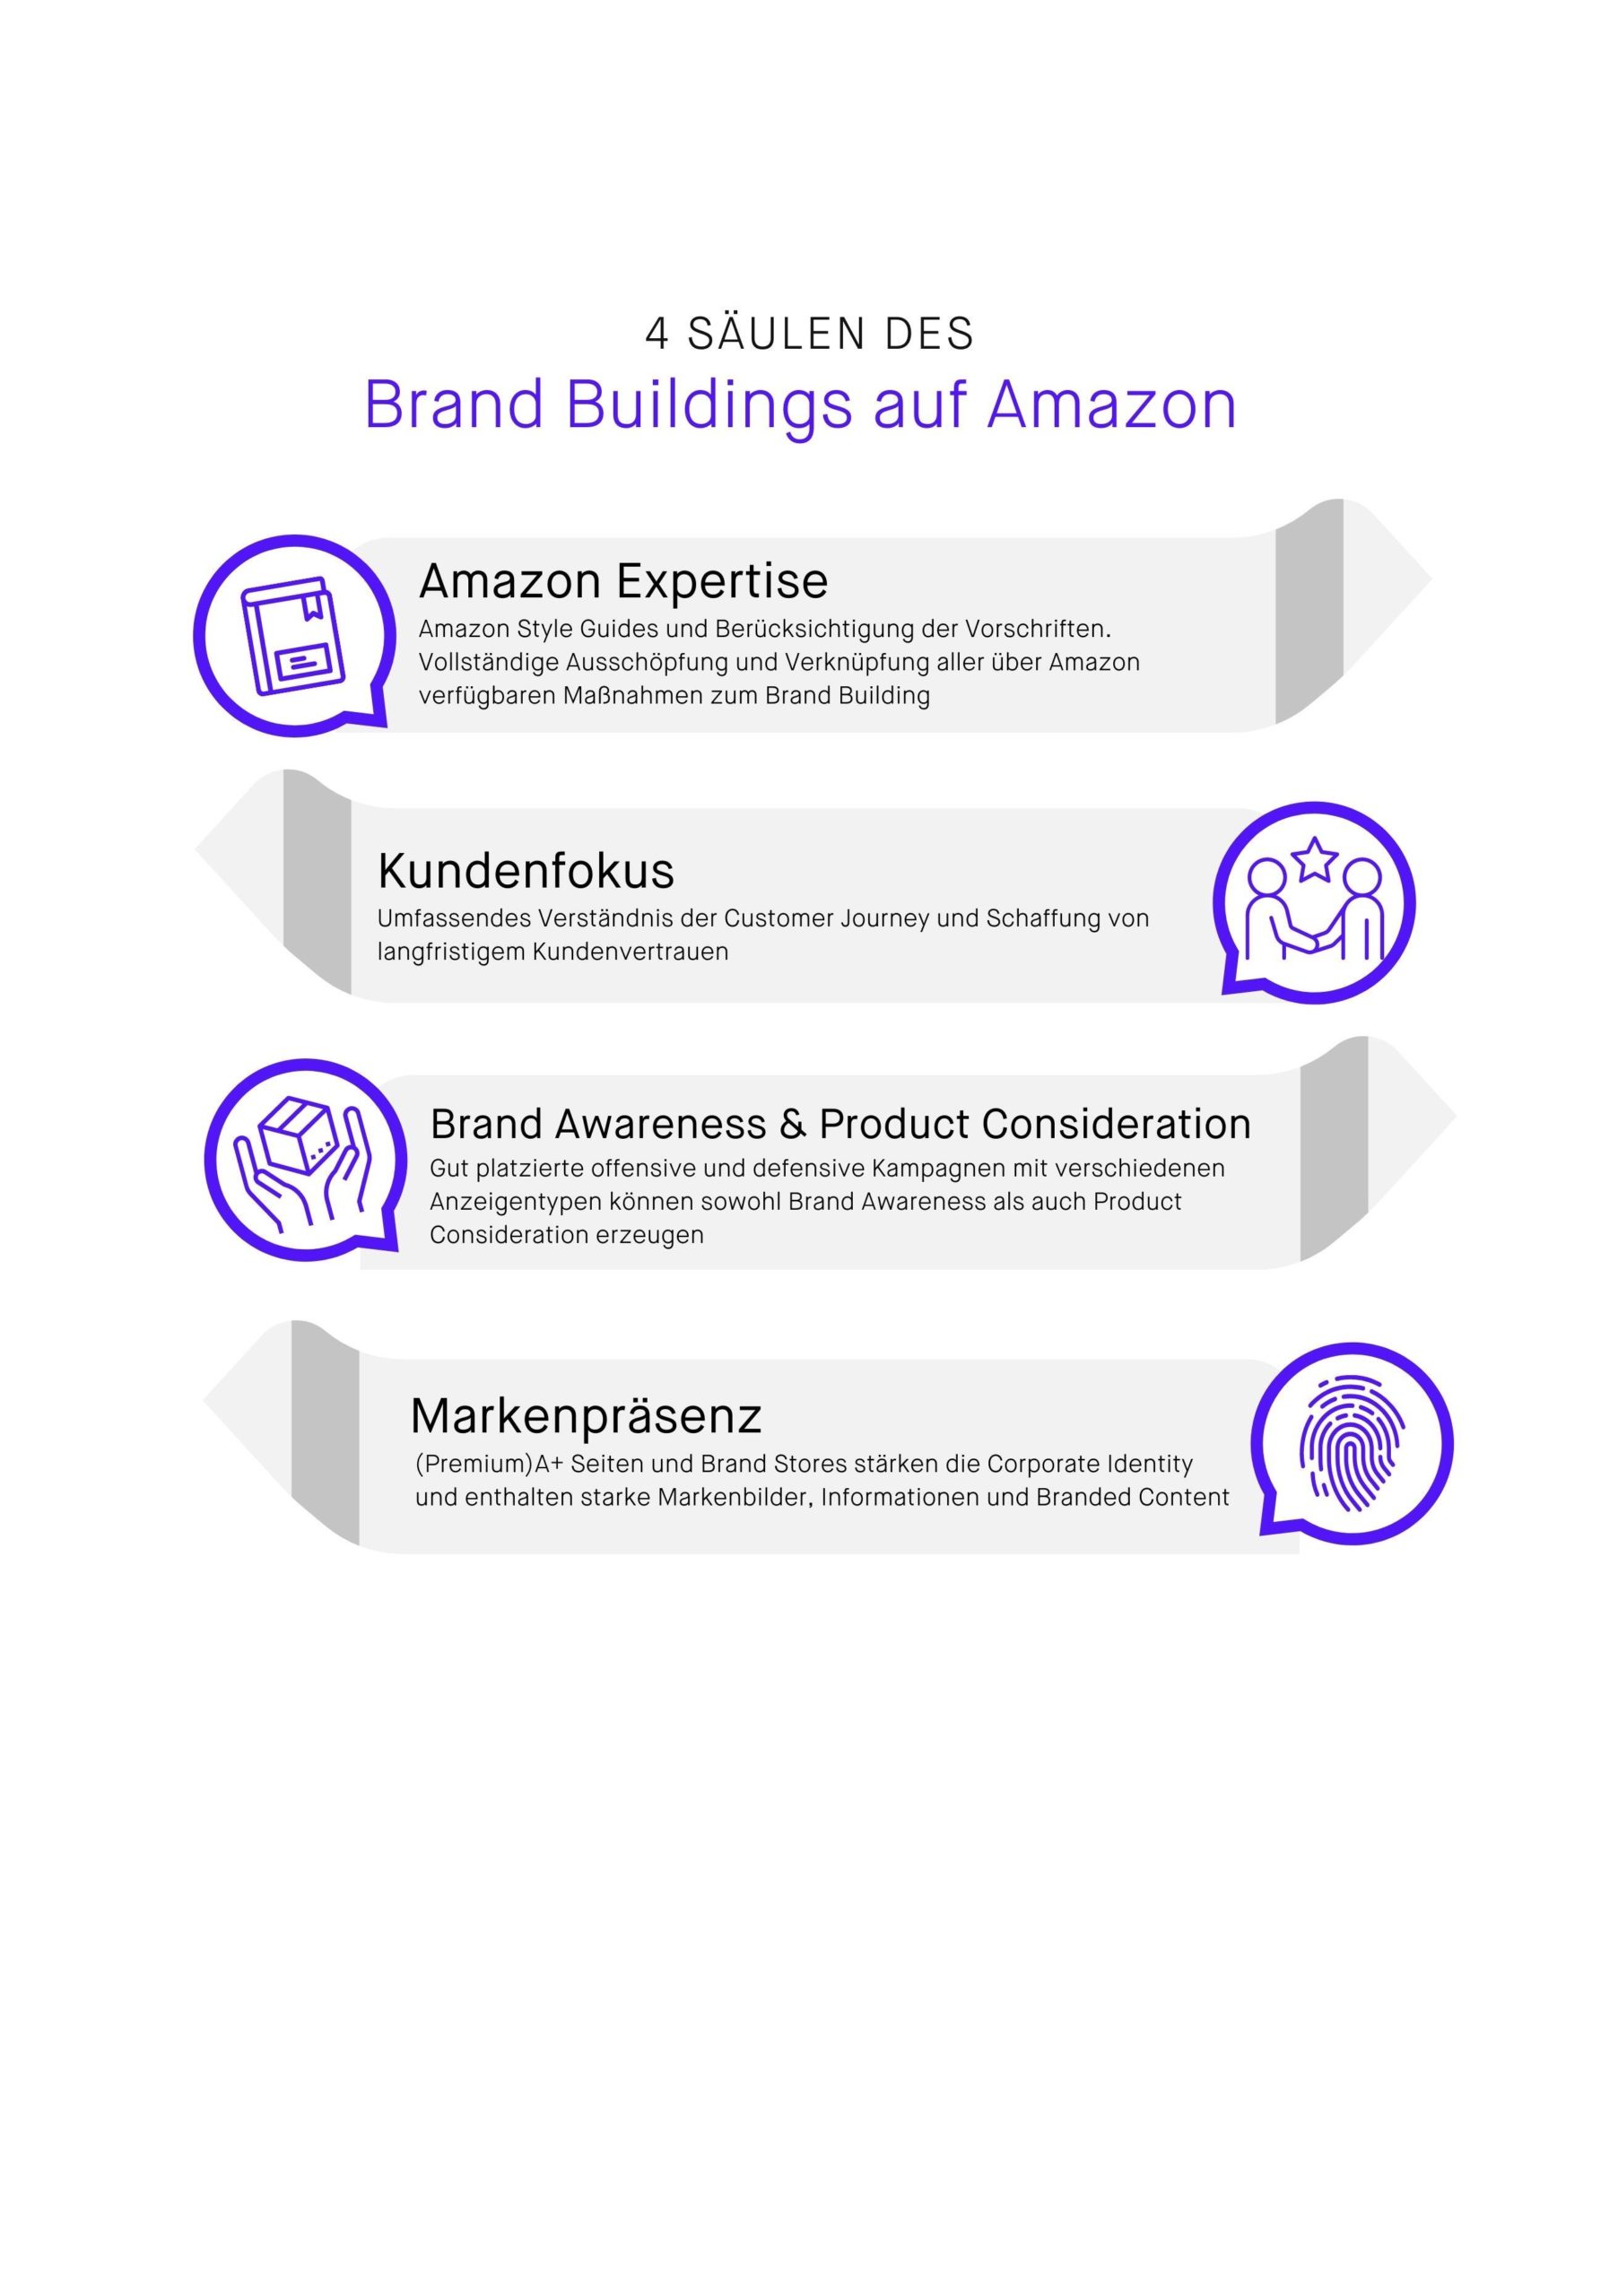 4 Pillars of Brand Building on Amazon  deutsch scaled